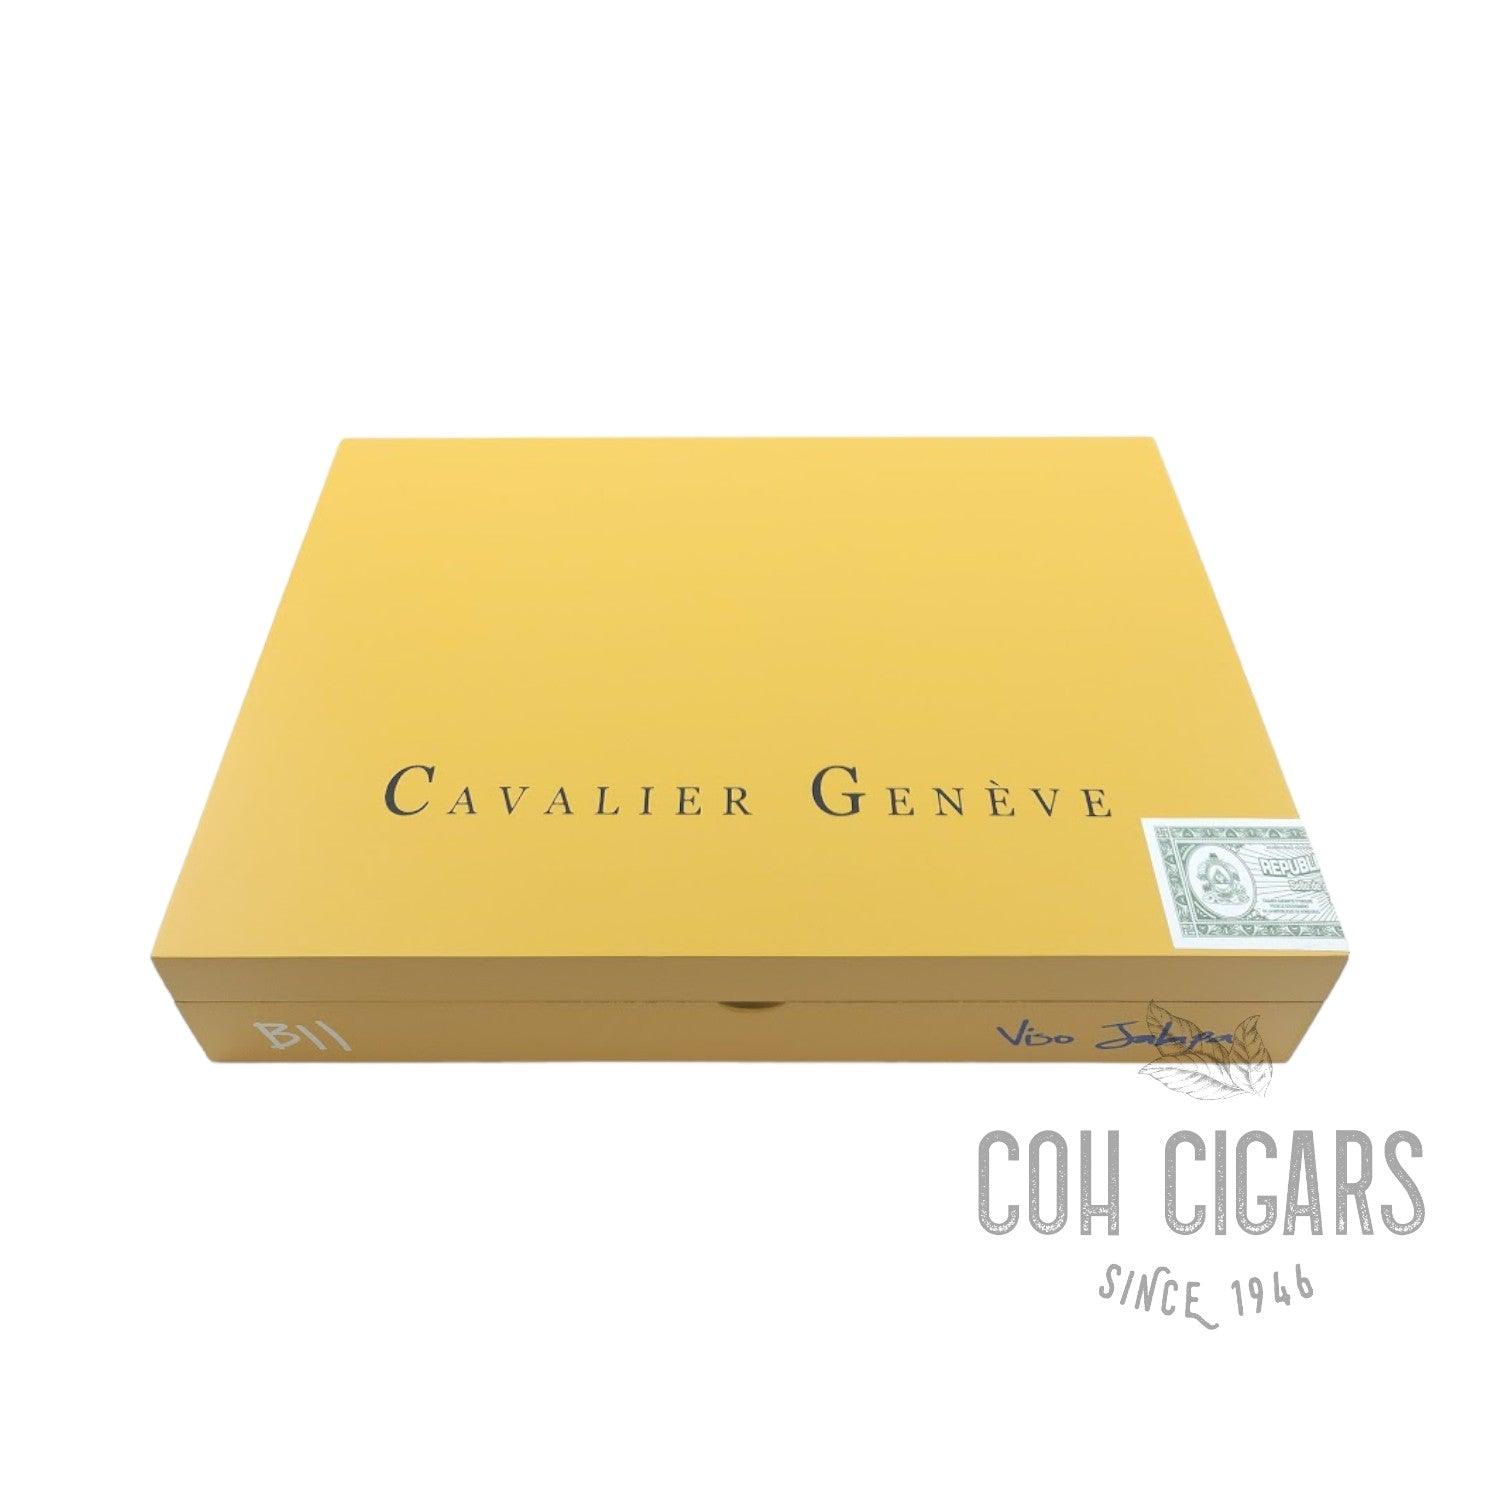 Cavalier Geneve Cigar | Bll Viso Jalapa Robusto Gordo | Box 20 - hk.cohcigars